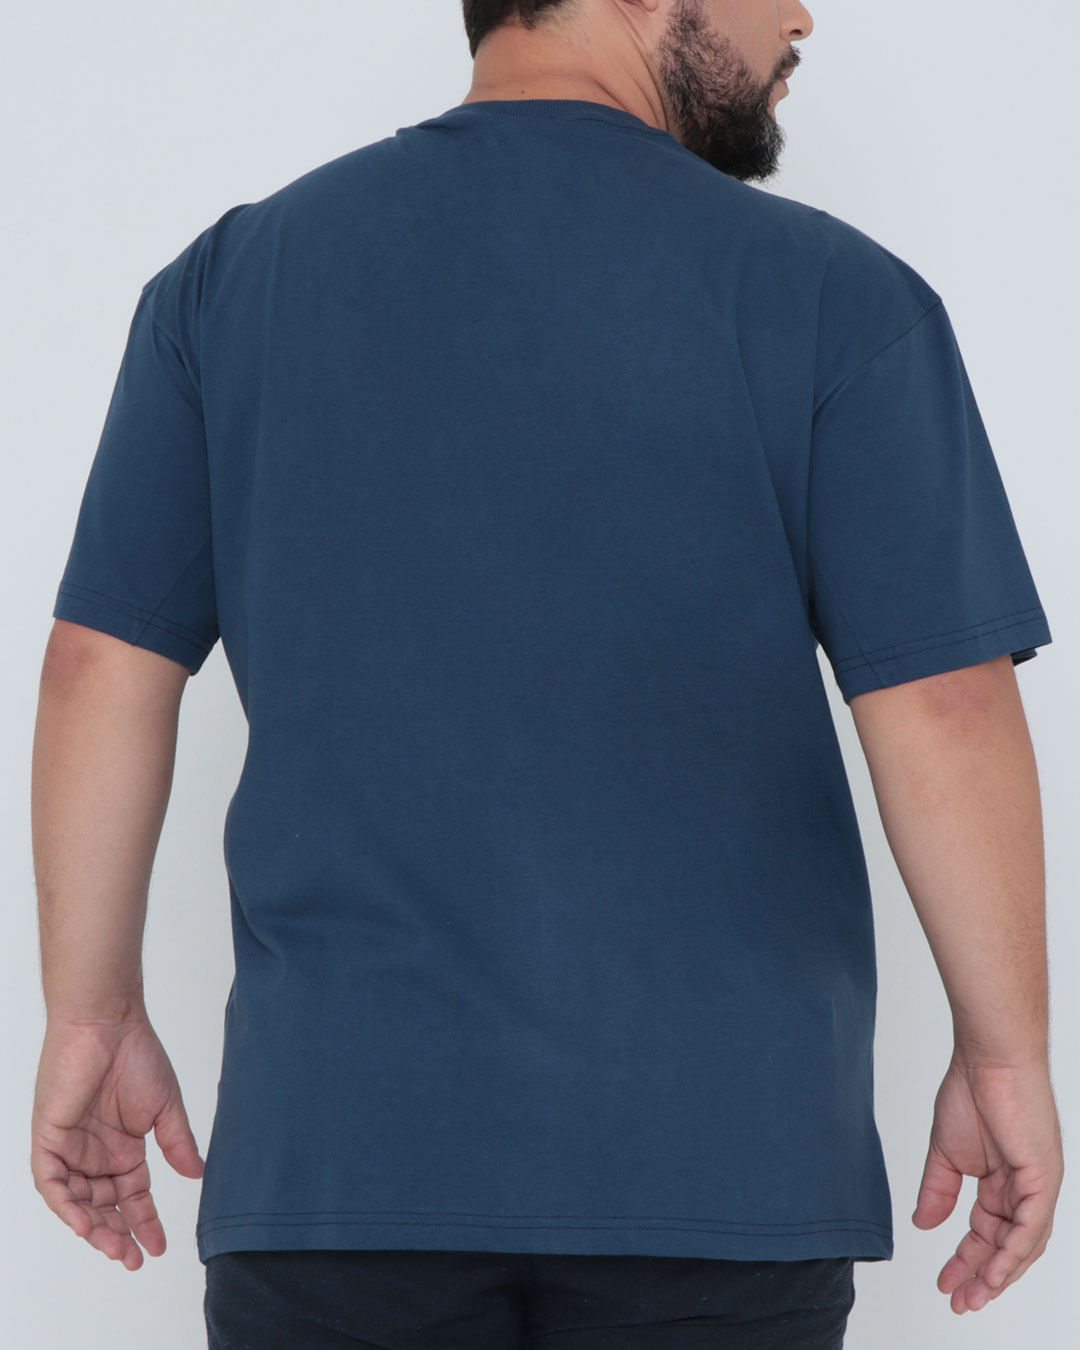 Camiseta-K201a-Ecko-Plus---Azul-Medio